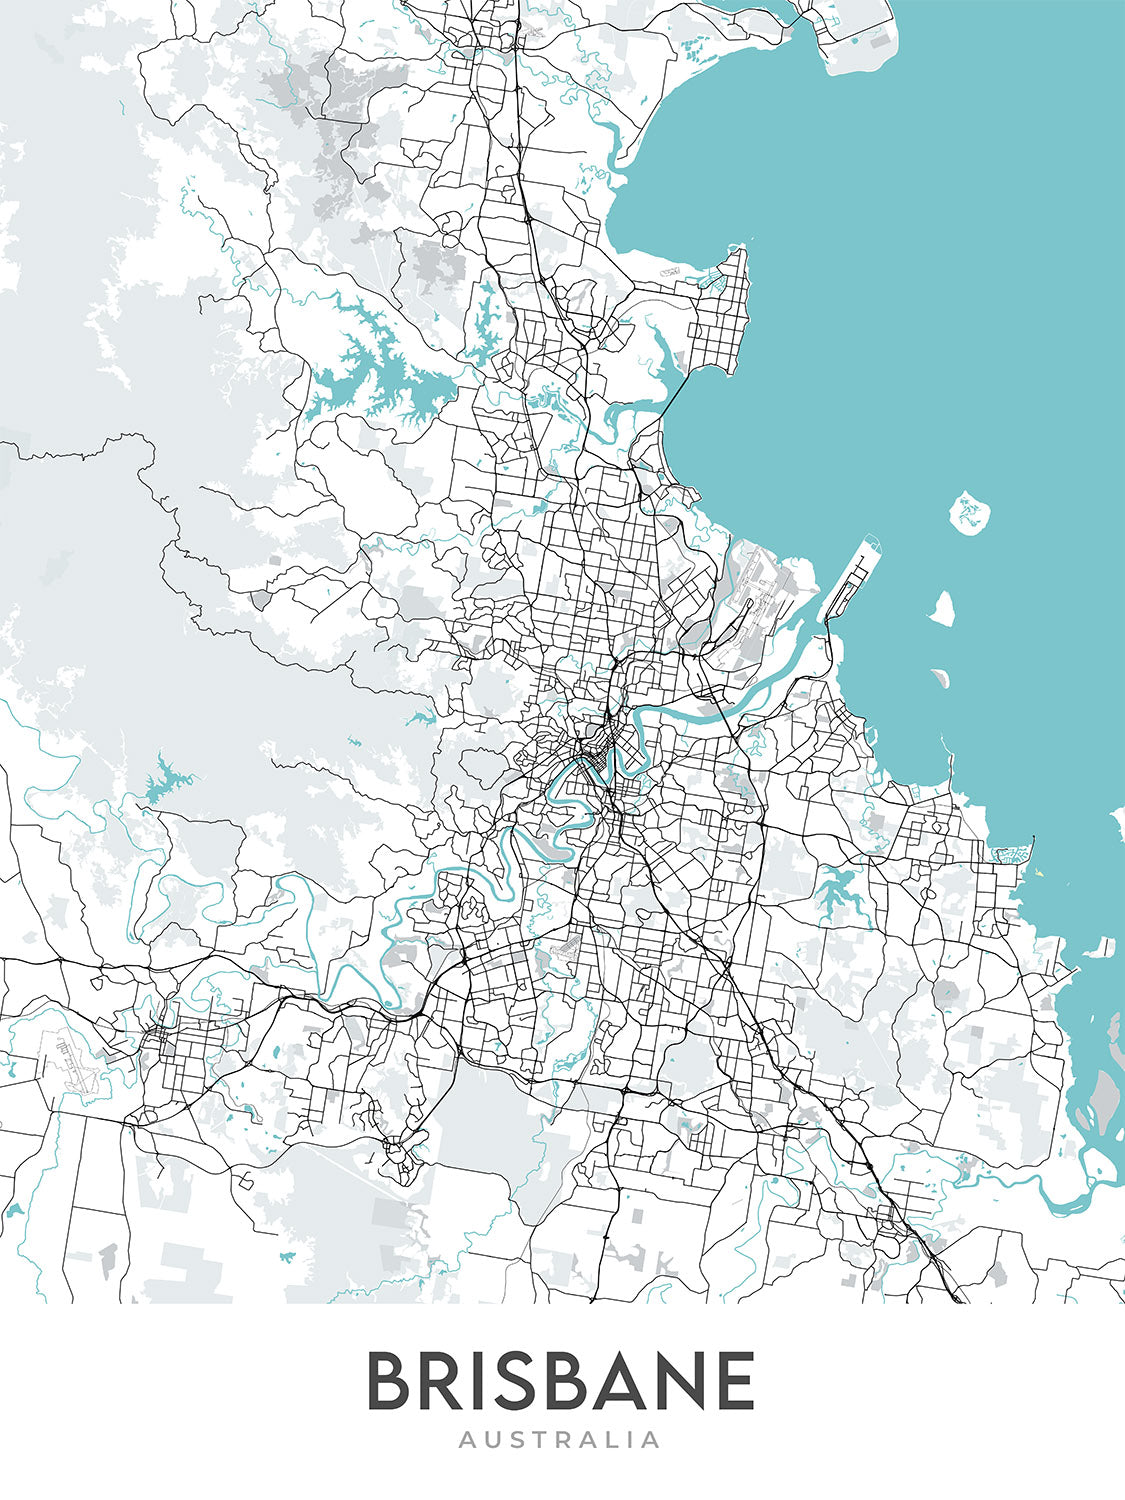 Modern City Map of Brisbane, Australia: City Hall, Story Bridge, South Bank, UQ, Airport